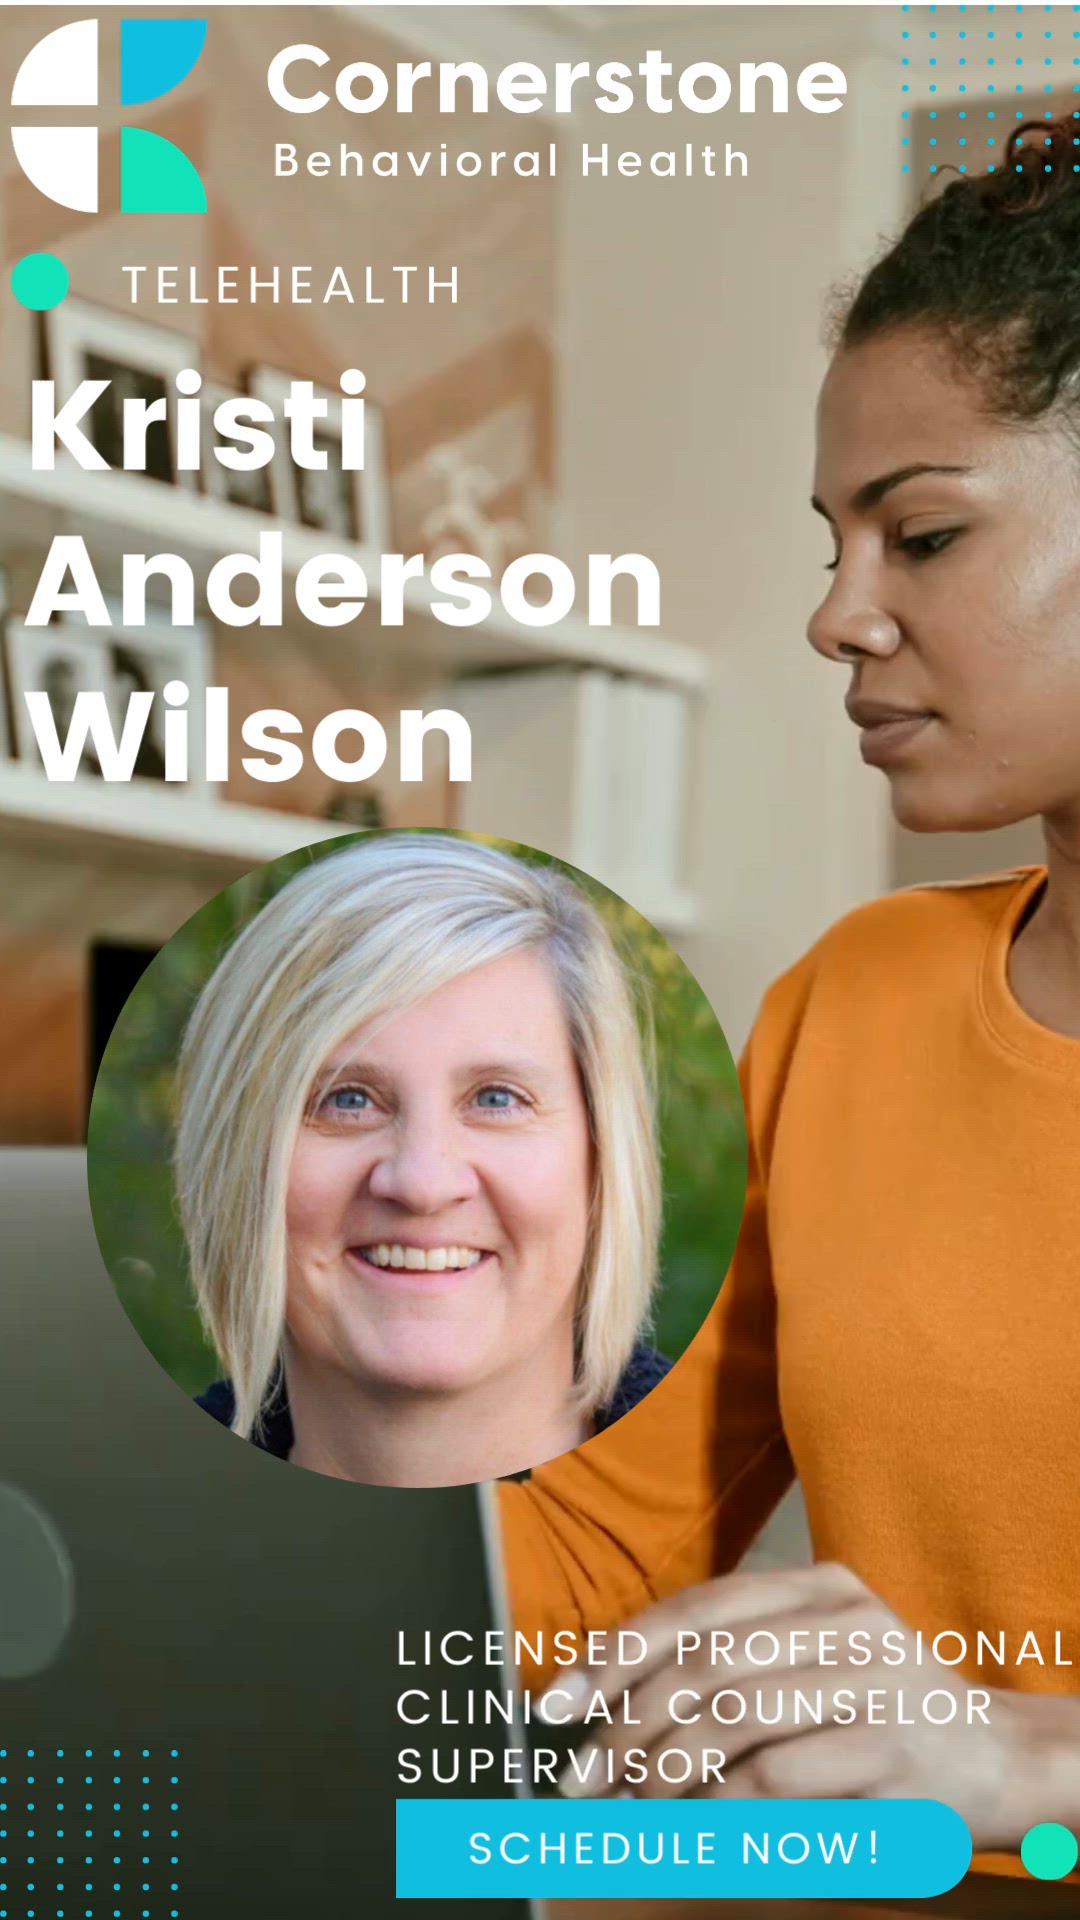 Kristi Anderson Wilson